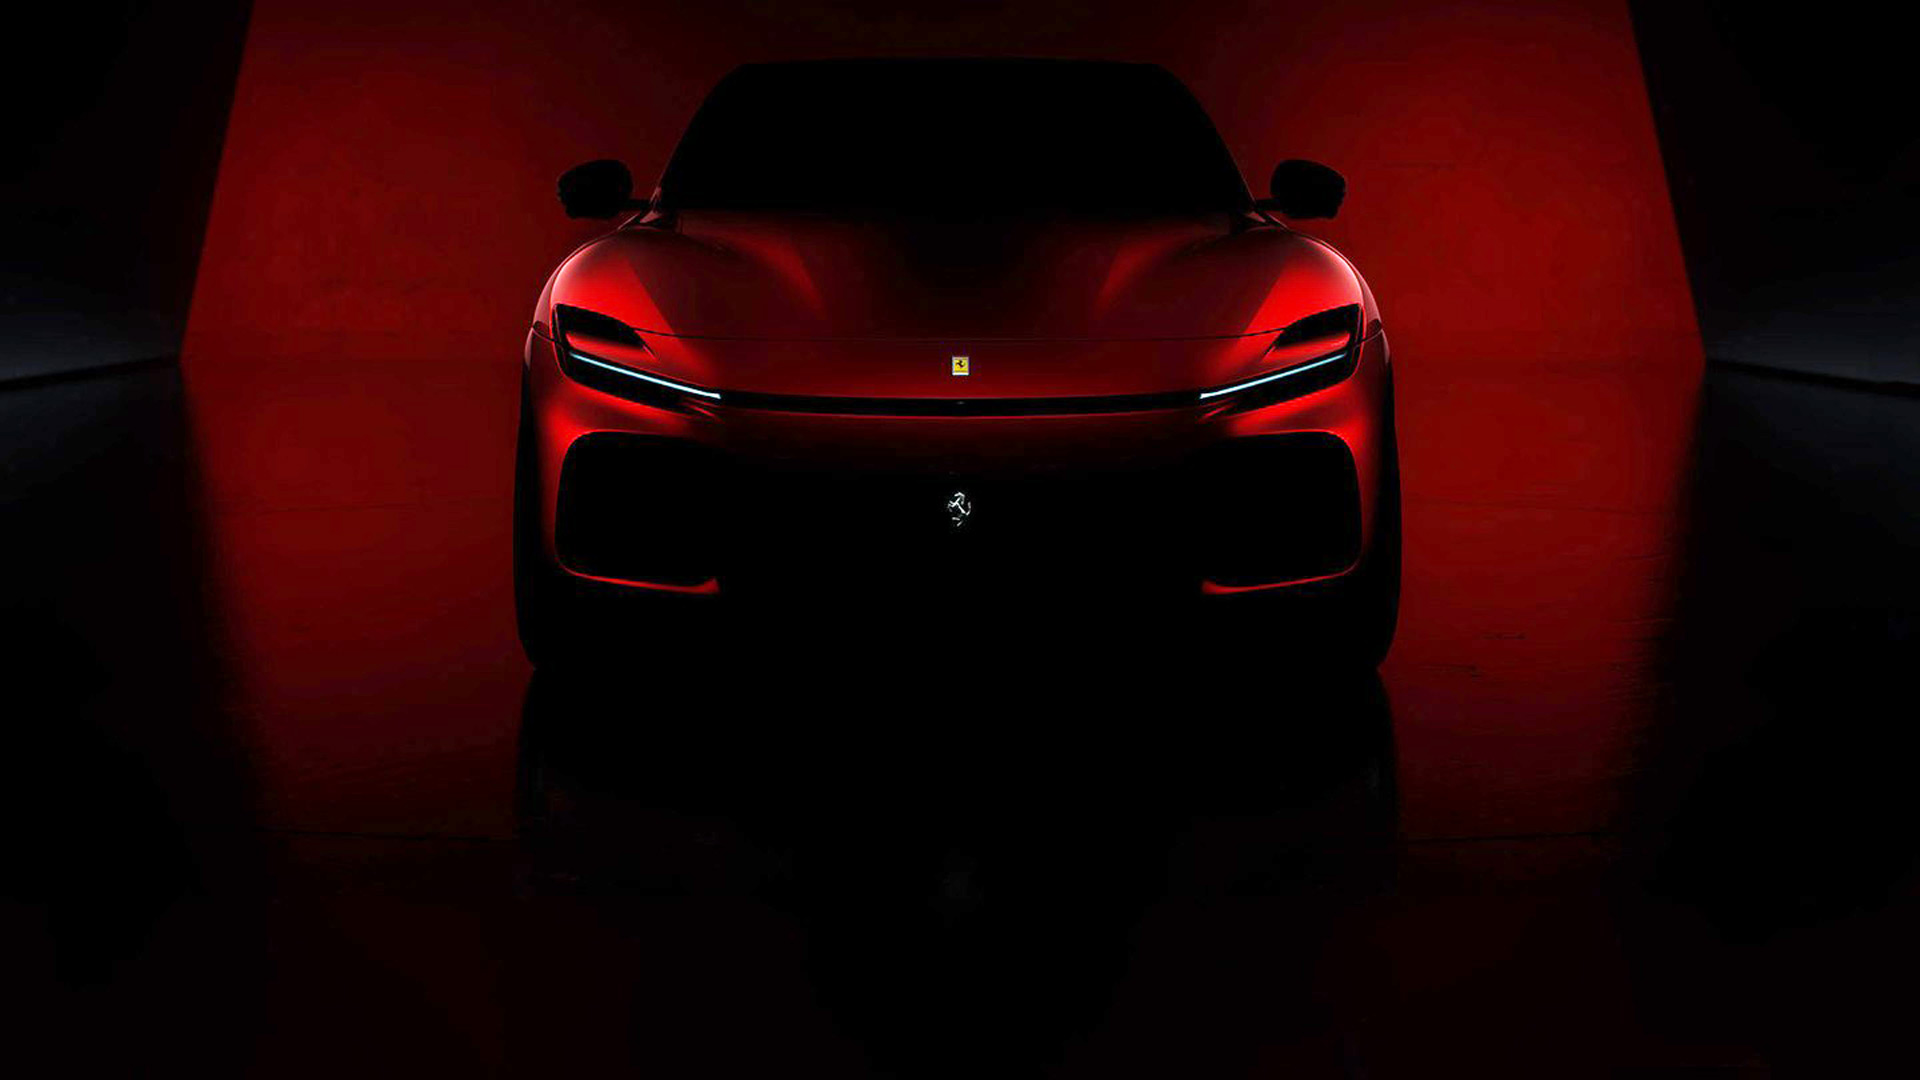 Ferrari Purosangue crossover coming Sept 13